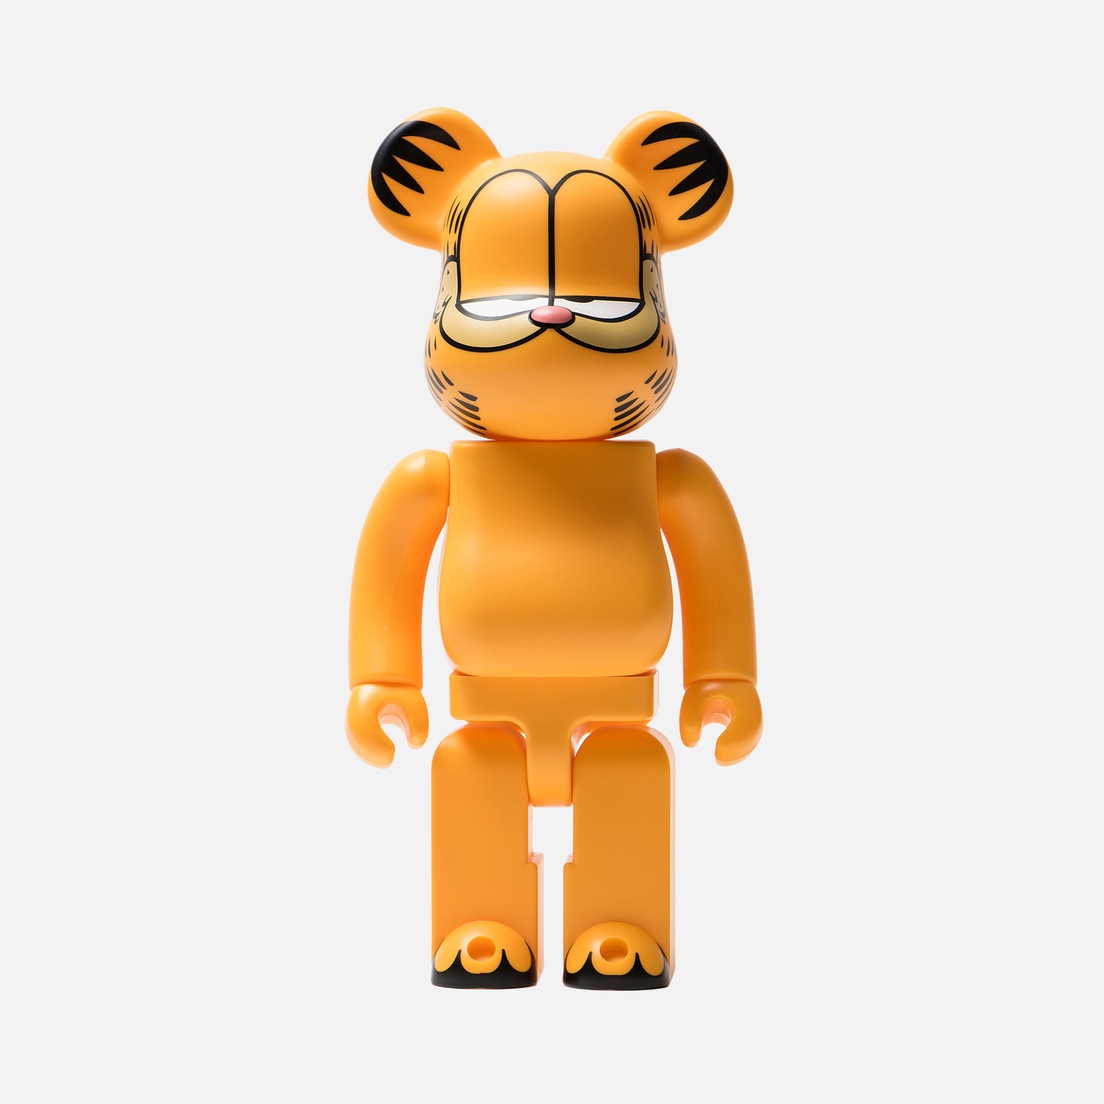 Medicom Toy Игрушка Bearbrick Garfield 400%